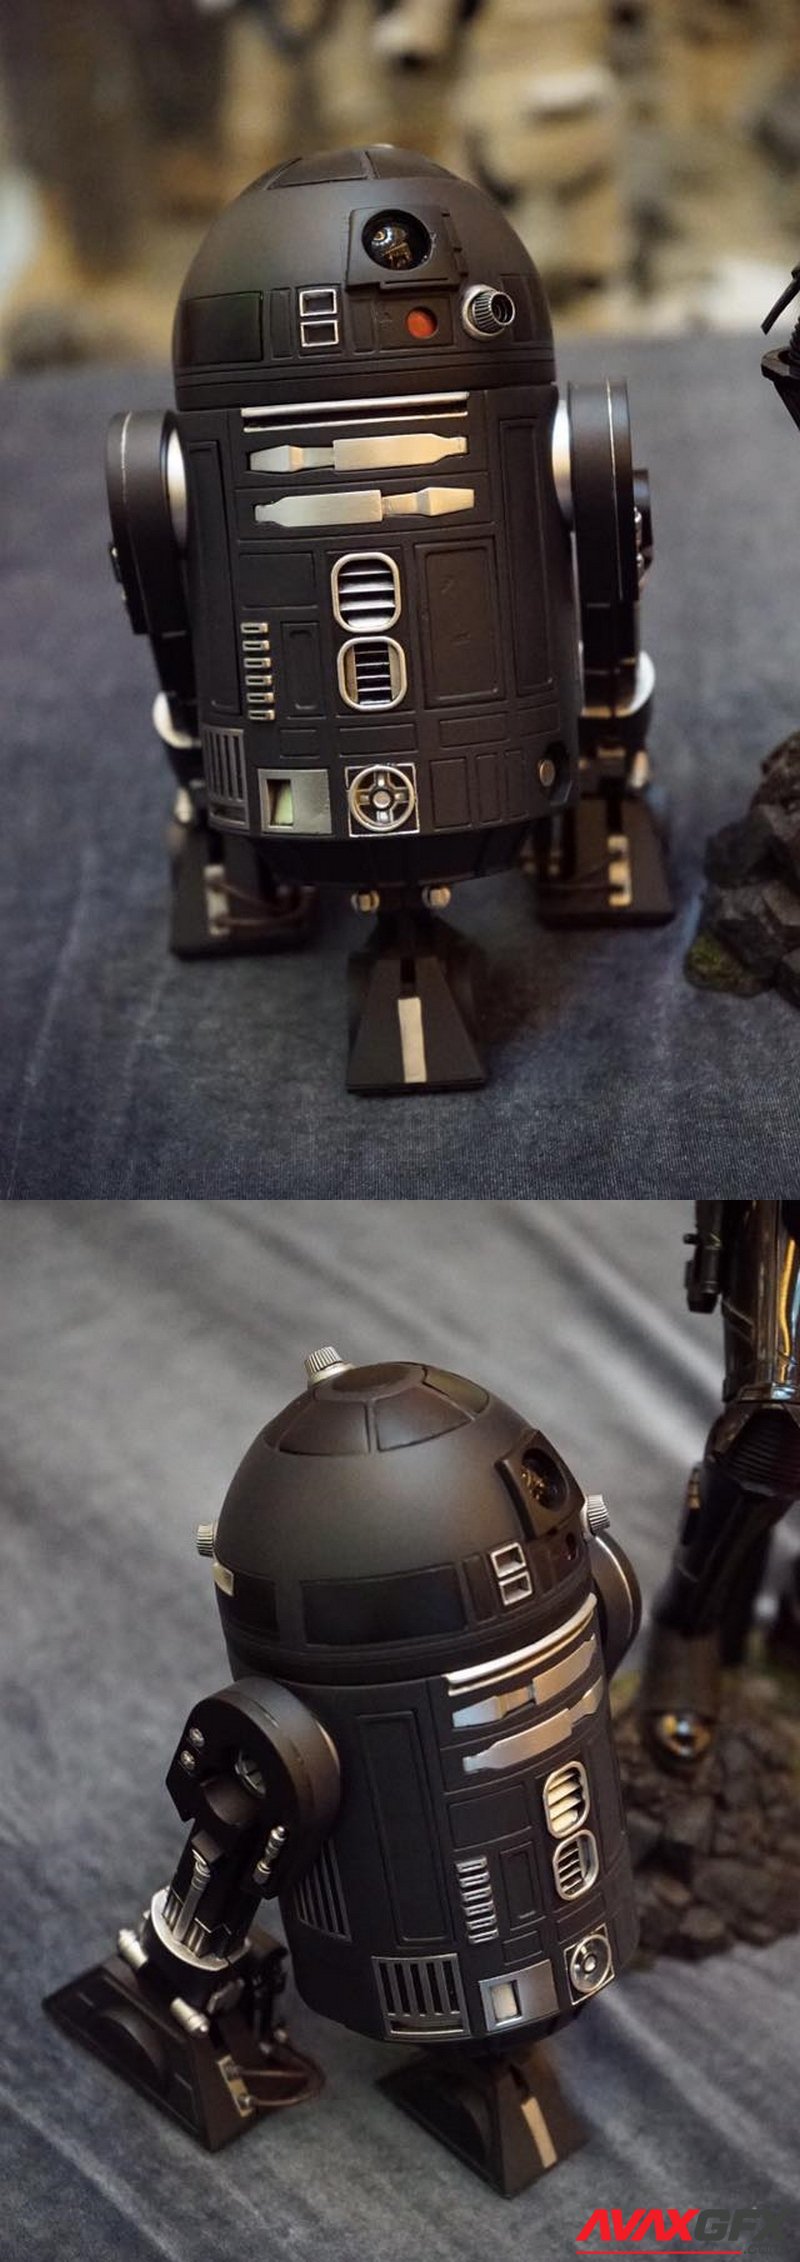 Star Wars - Large R2-D2 Astromech Droid Replica